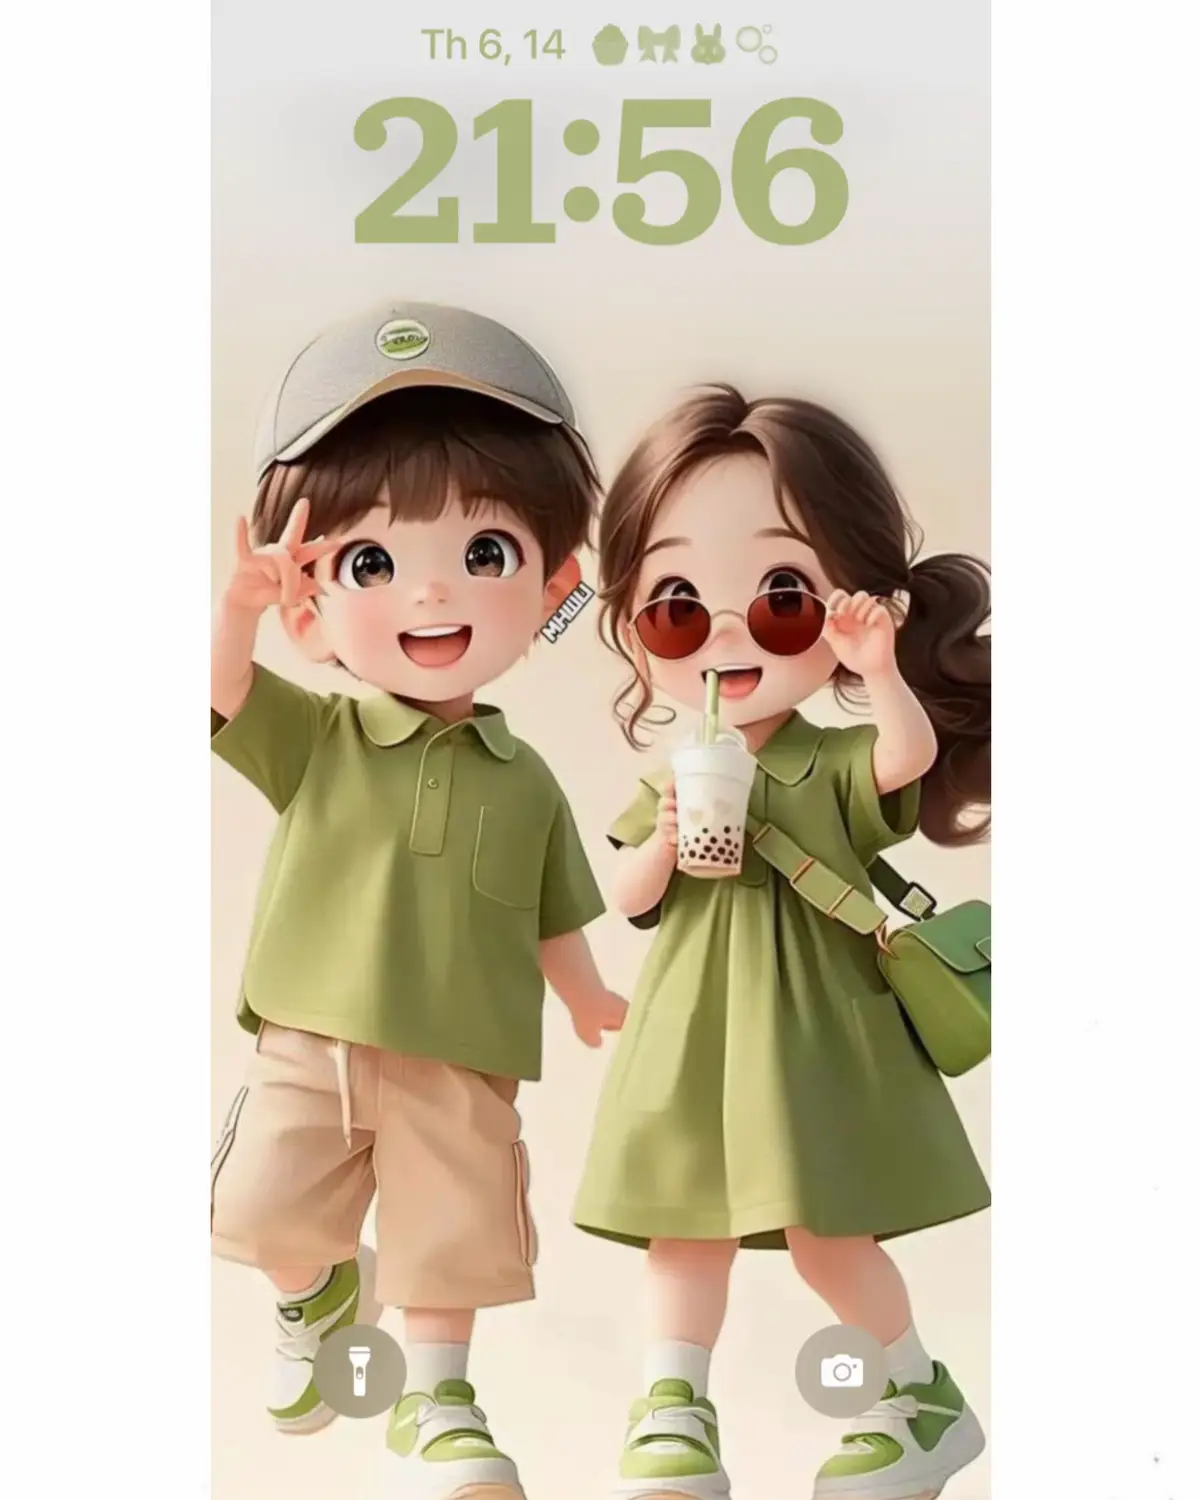 Couple siêu siêu cute luôn mấy ní ơi 😍 #wallpaper #muonduoclenxuhuong #hinhnen #hinhnendienthoai #couple #cute 